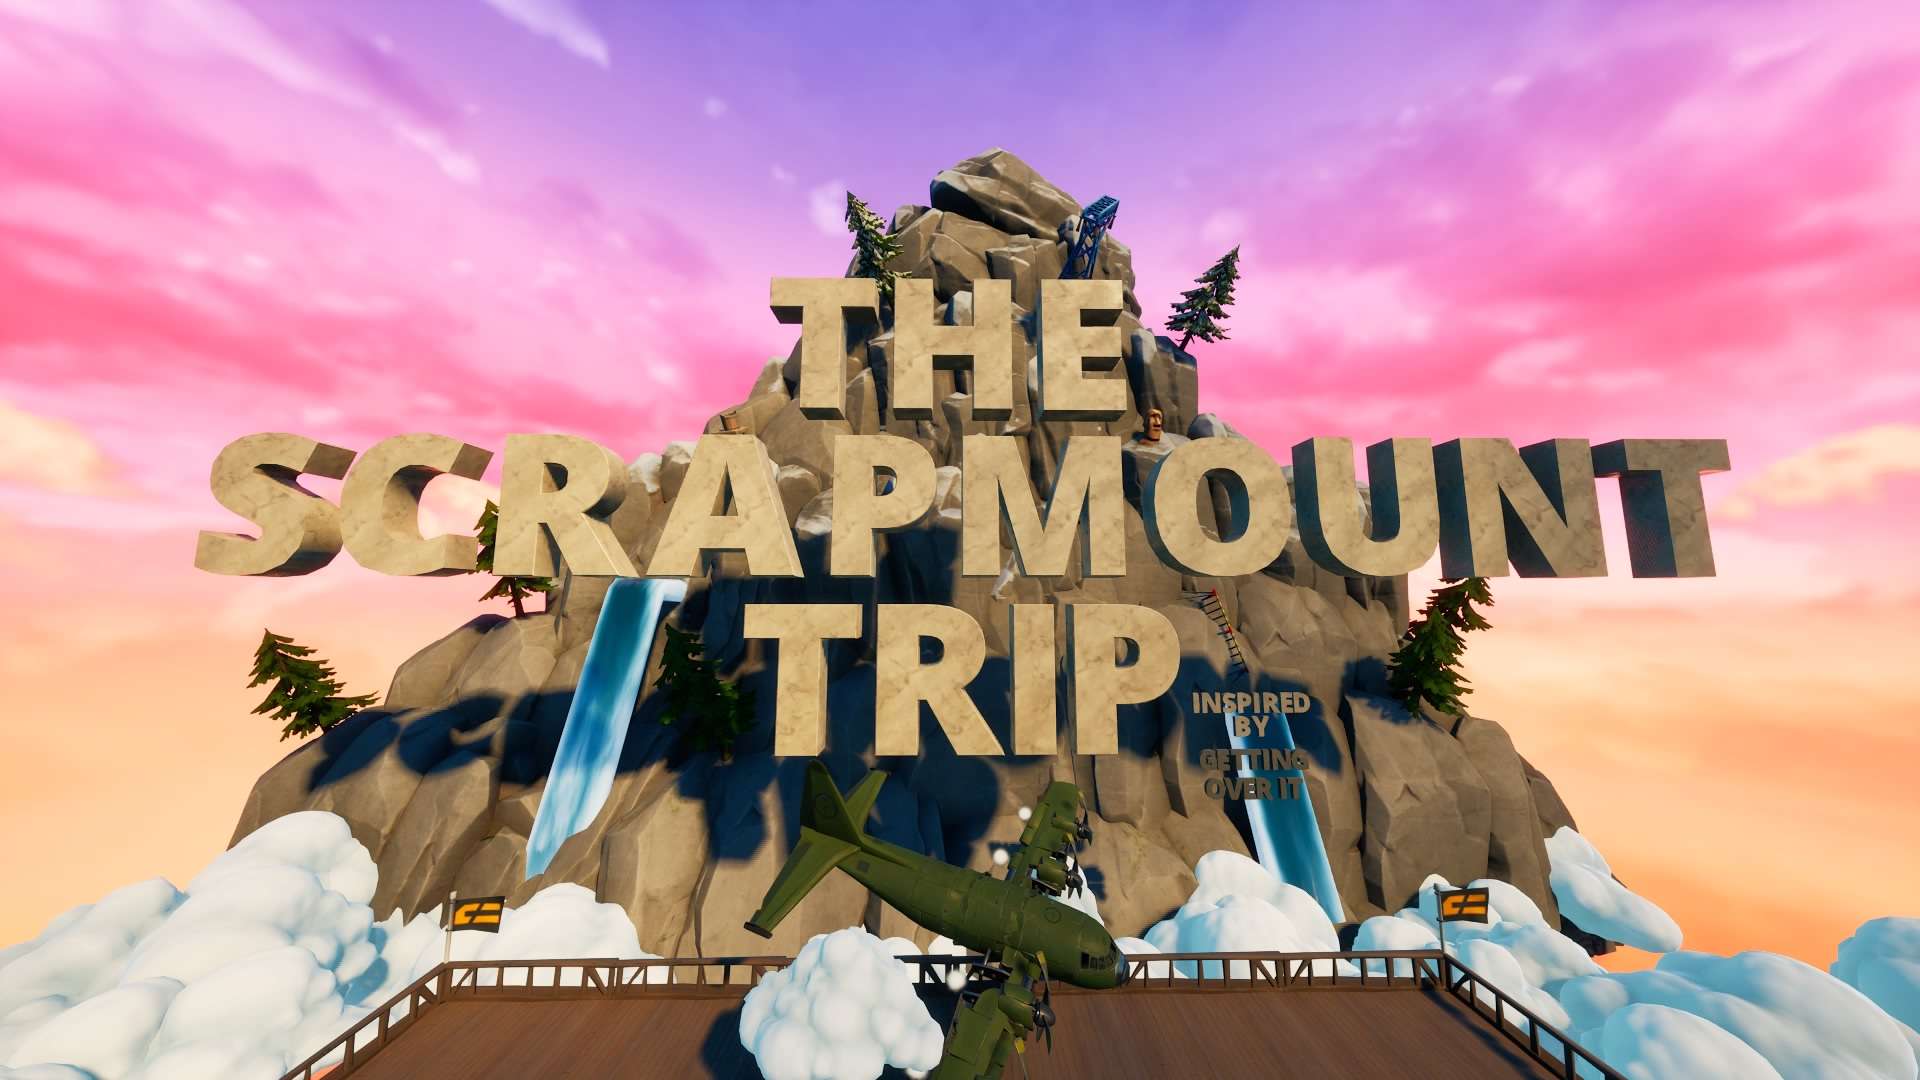 The Scrapmount Trip